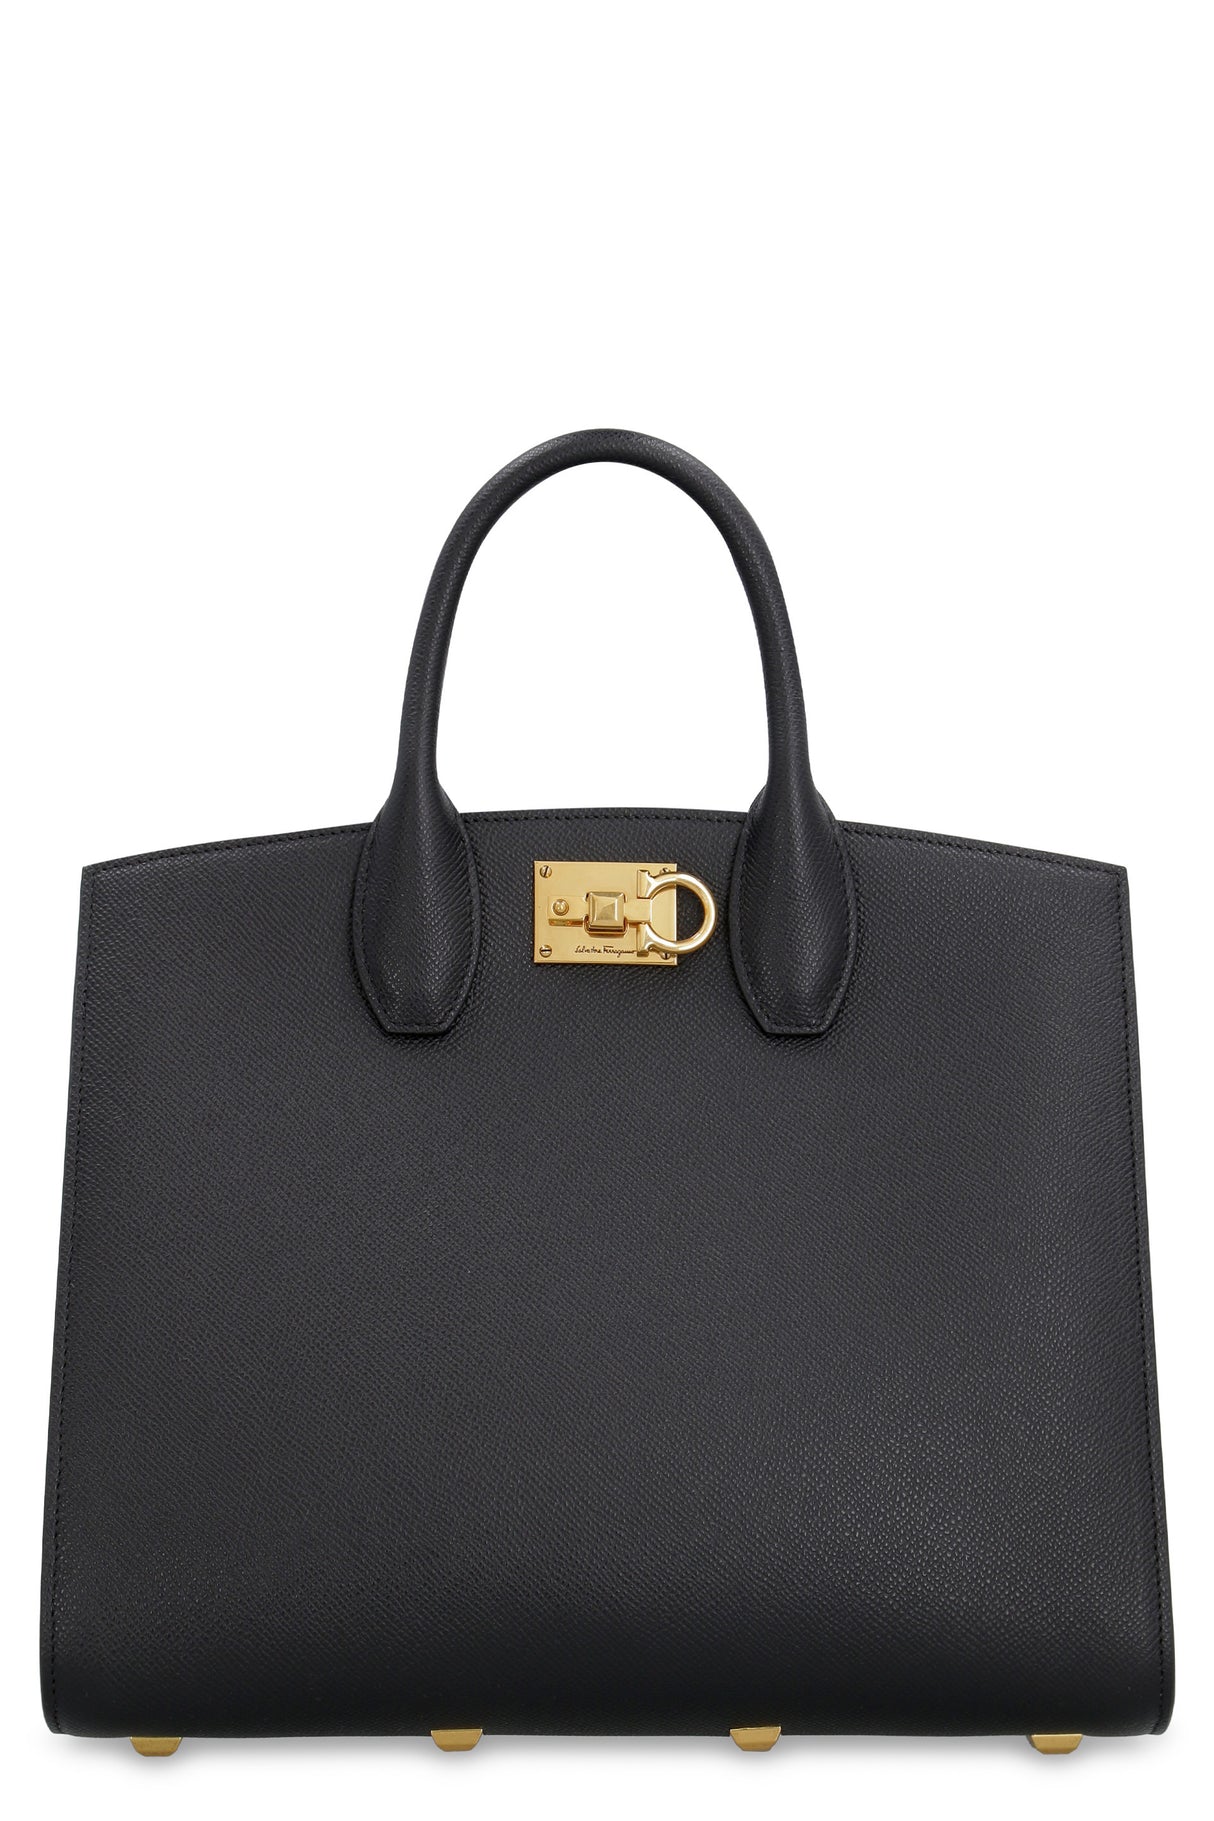 FERRAGAMO Luxury Black Leather Handbag for Women - High End Studio Style